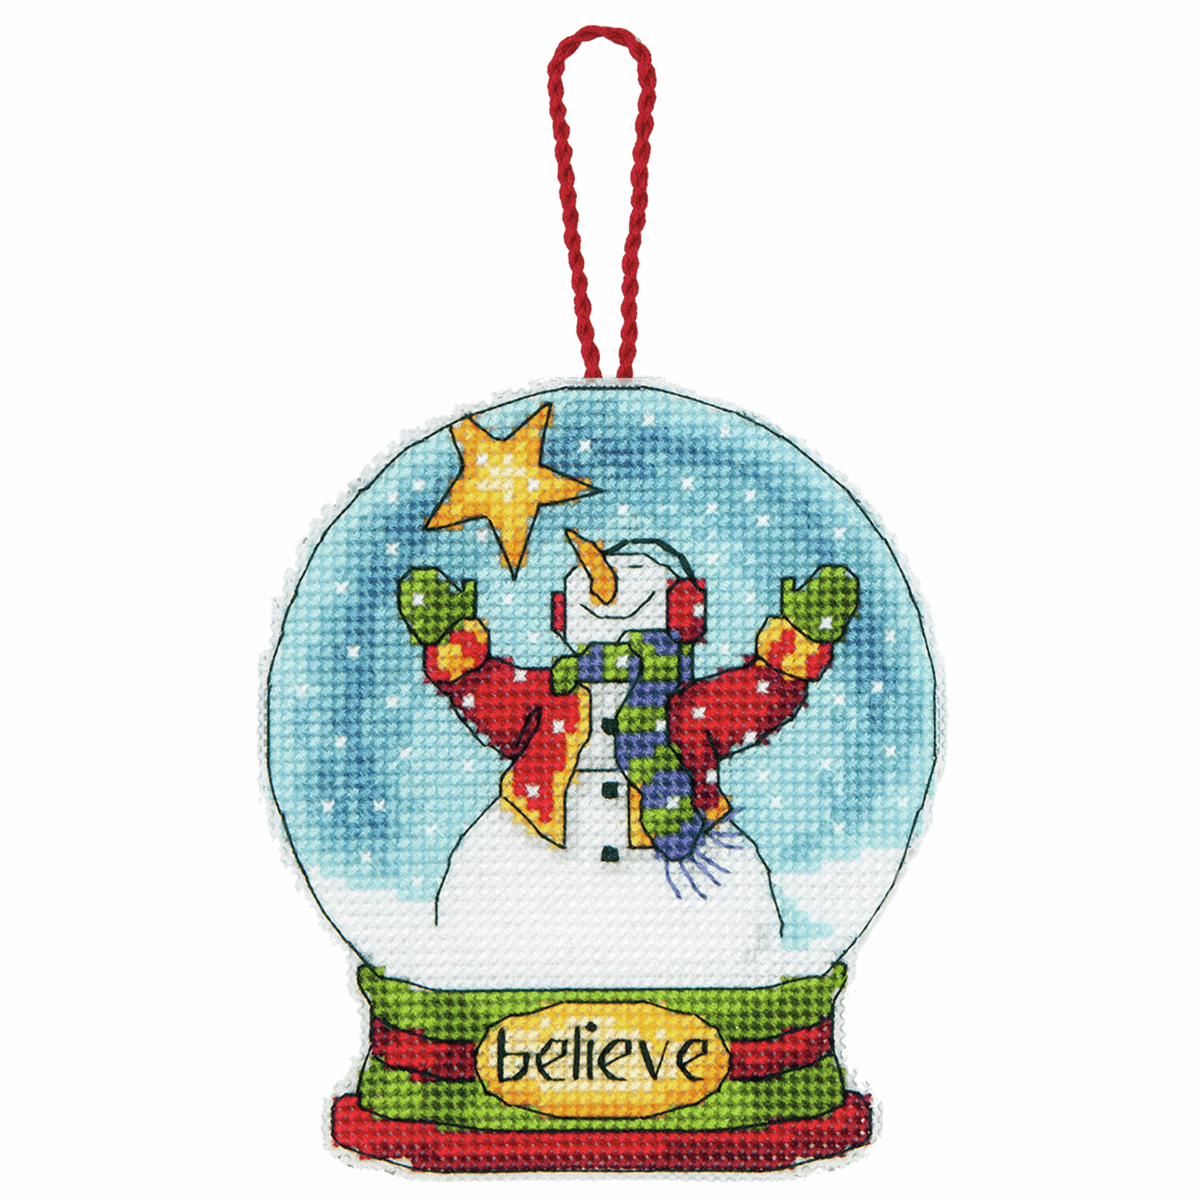 Counted Cross Stitch Snow Globe - Believe